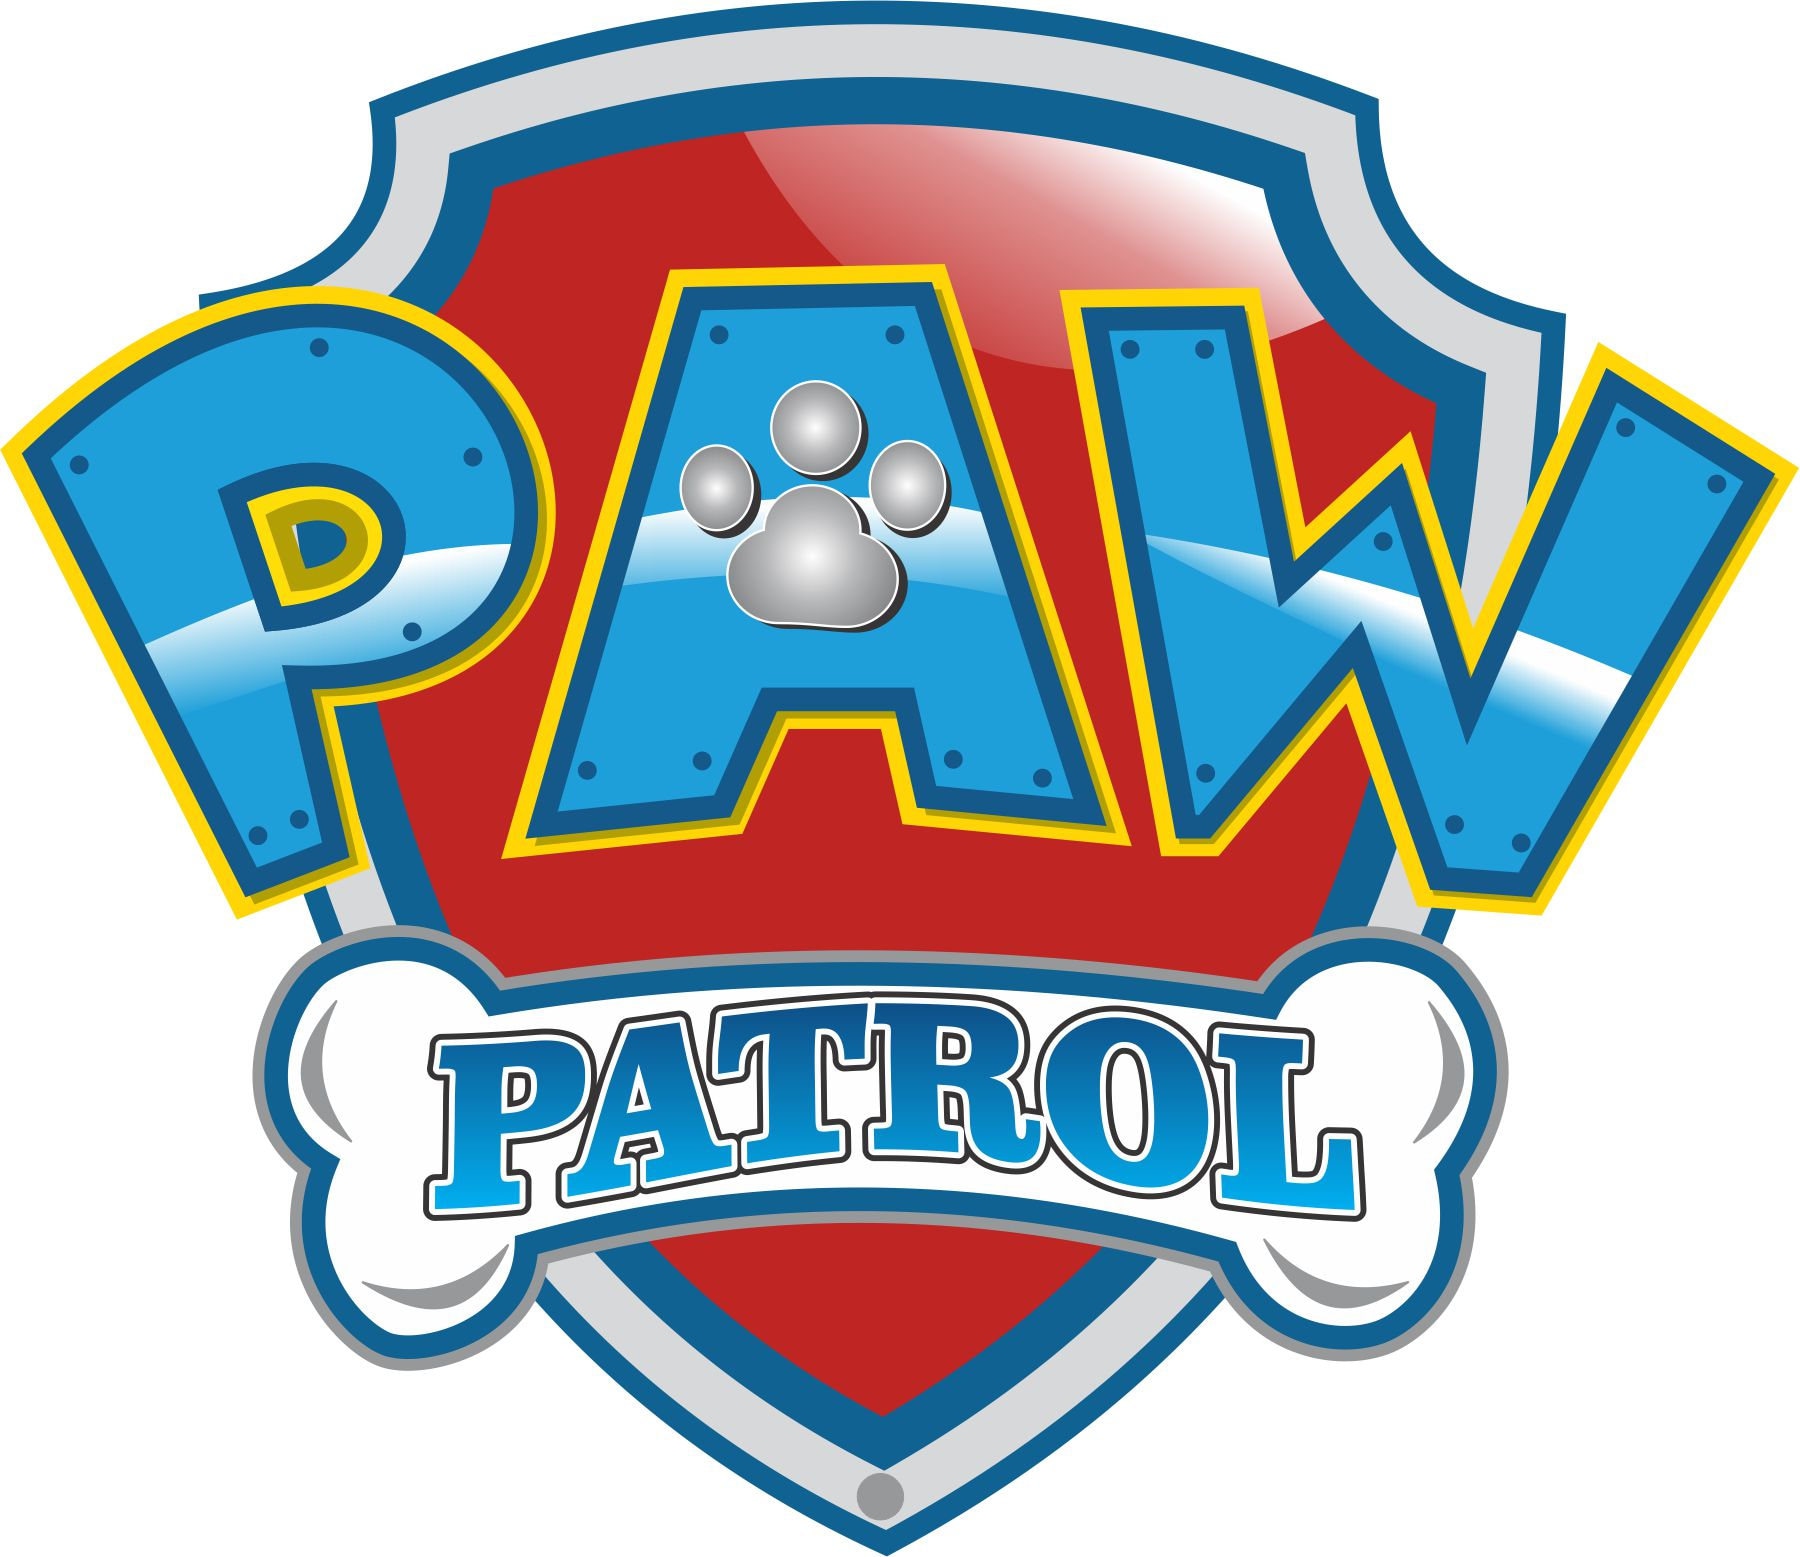 free paw patrol svg file